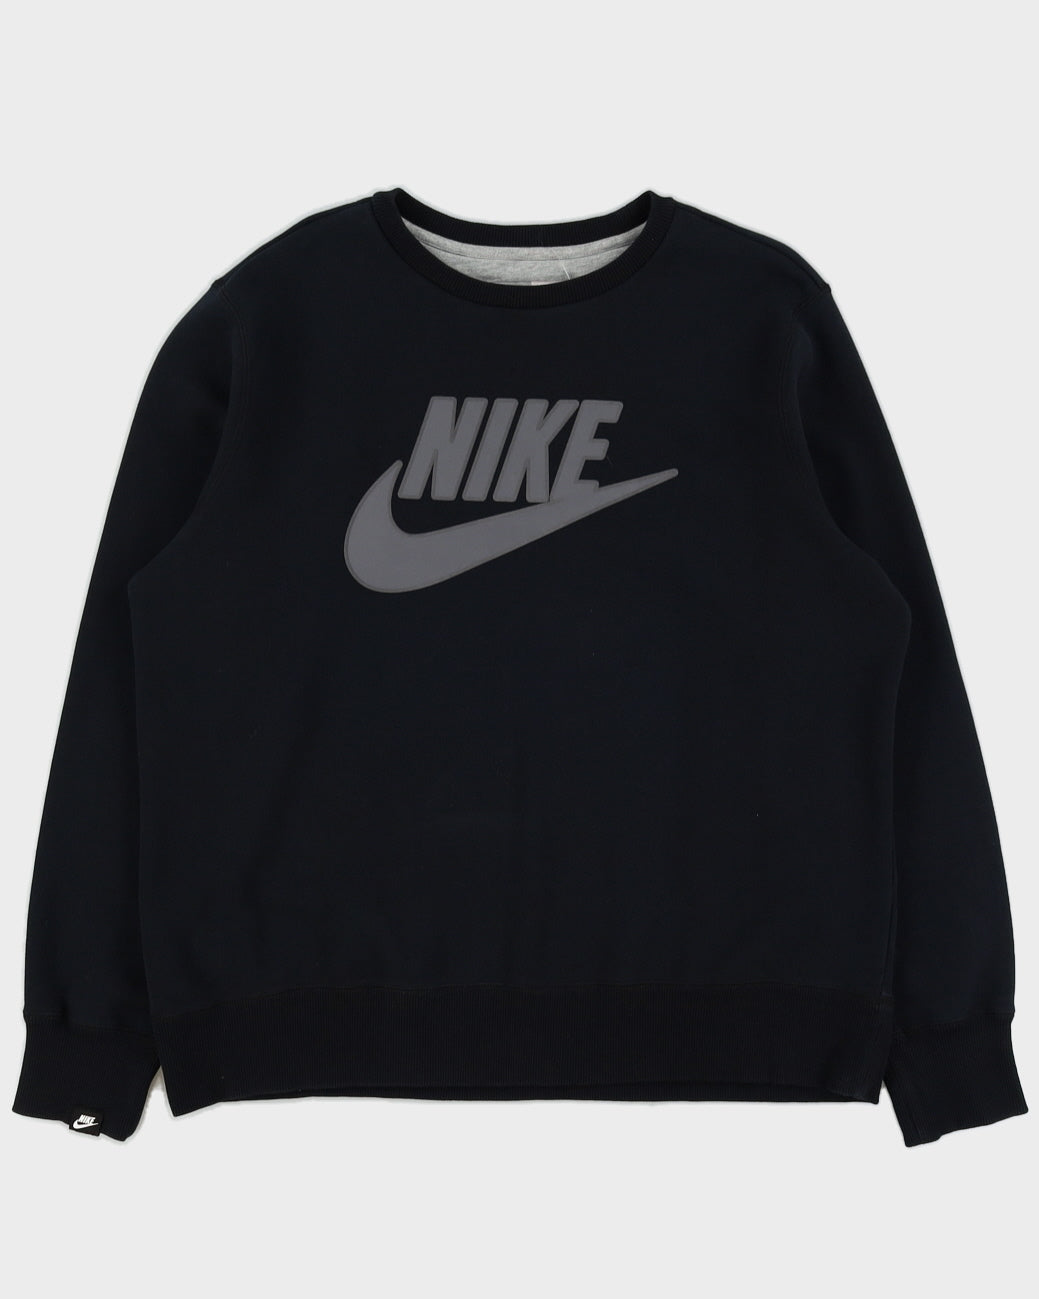 00s Nike Black Spell Out Sweatshirt - XL